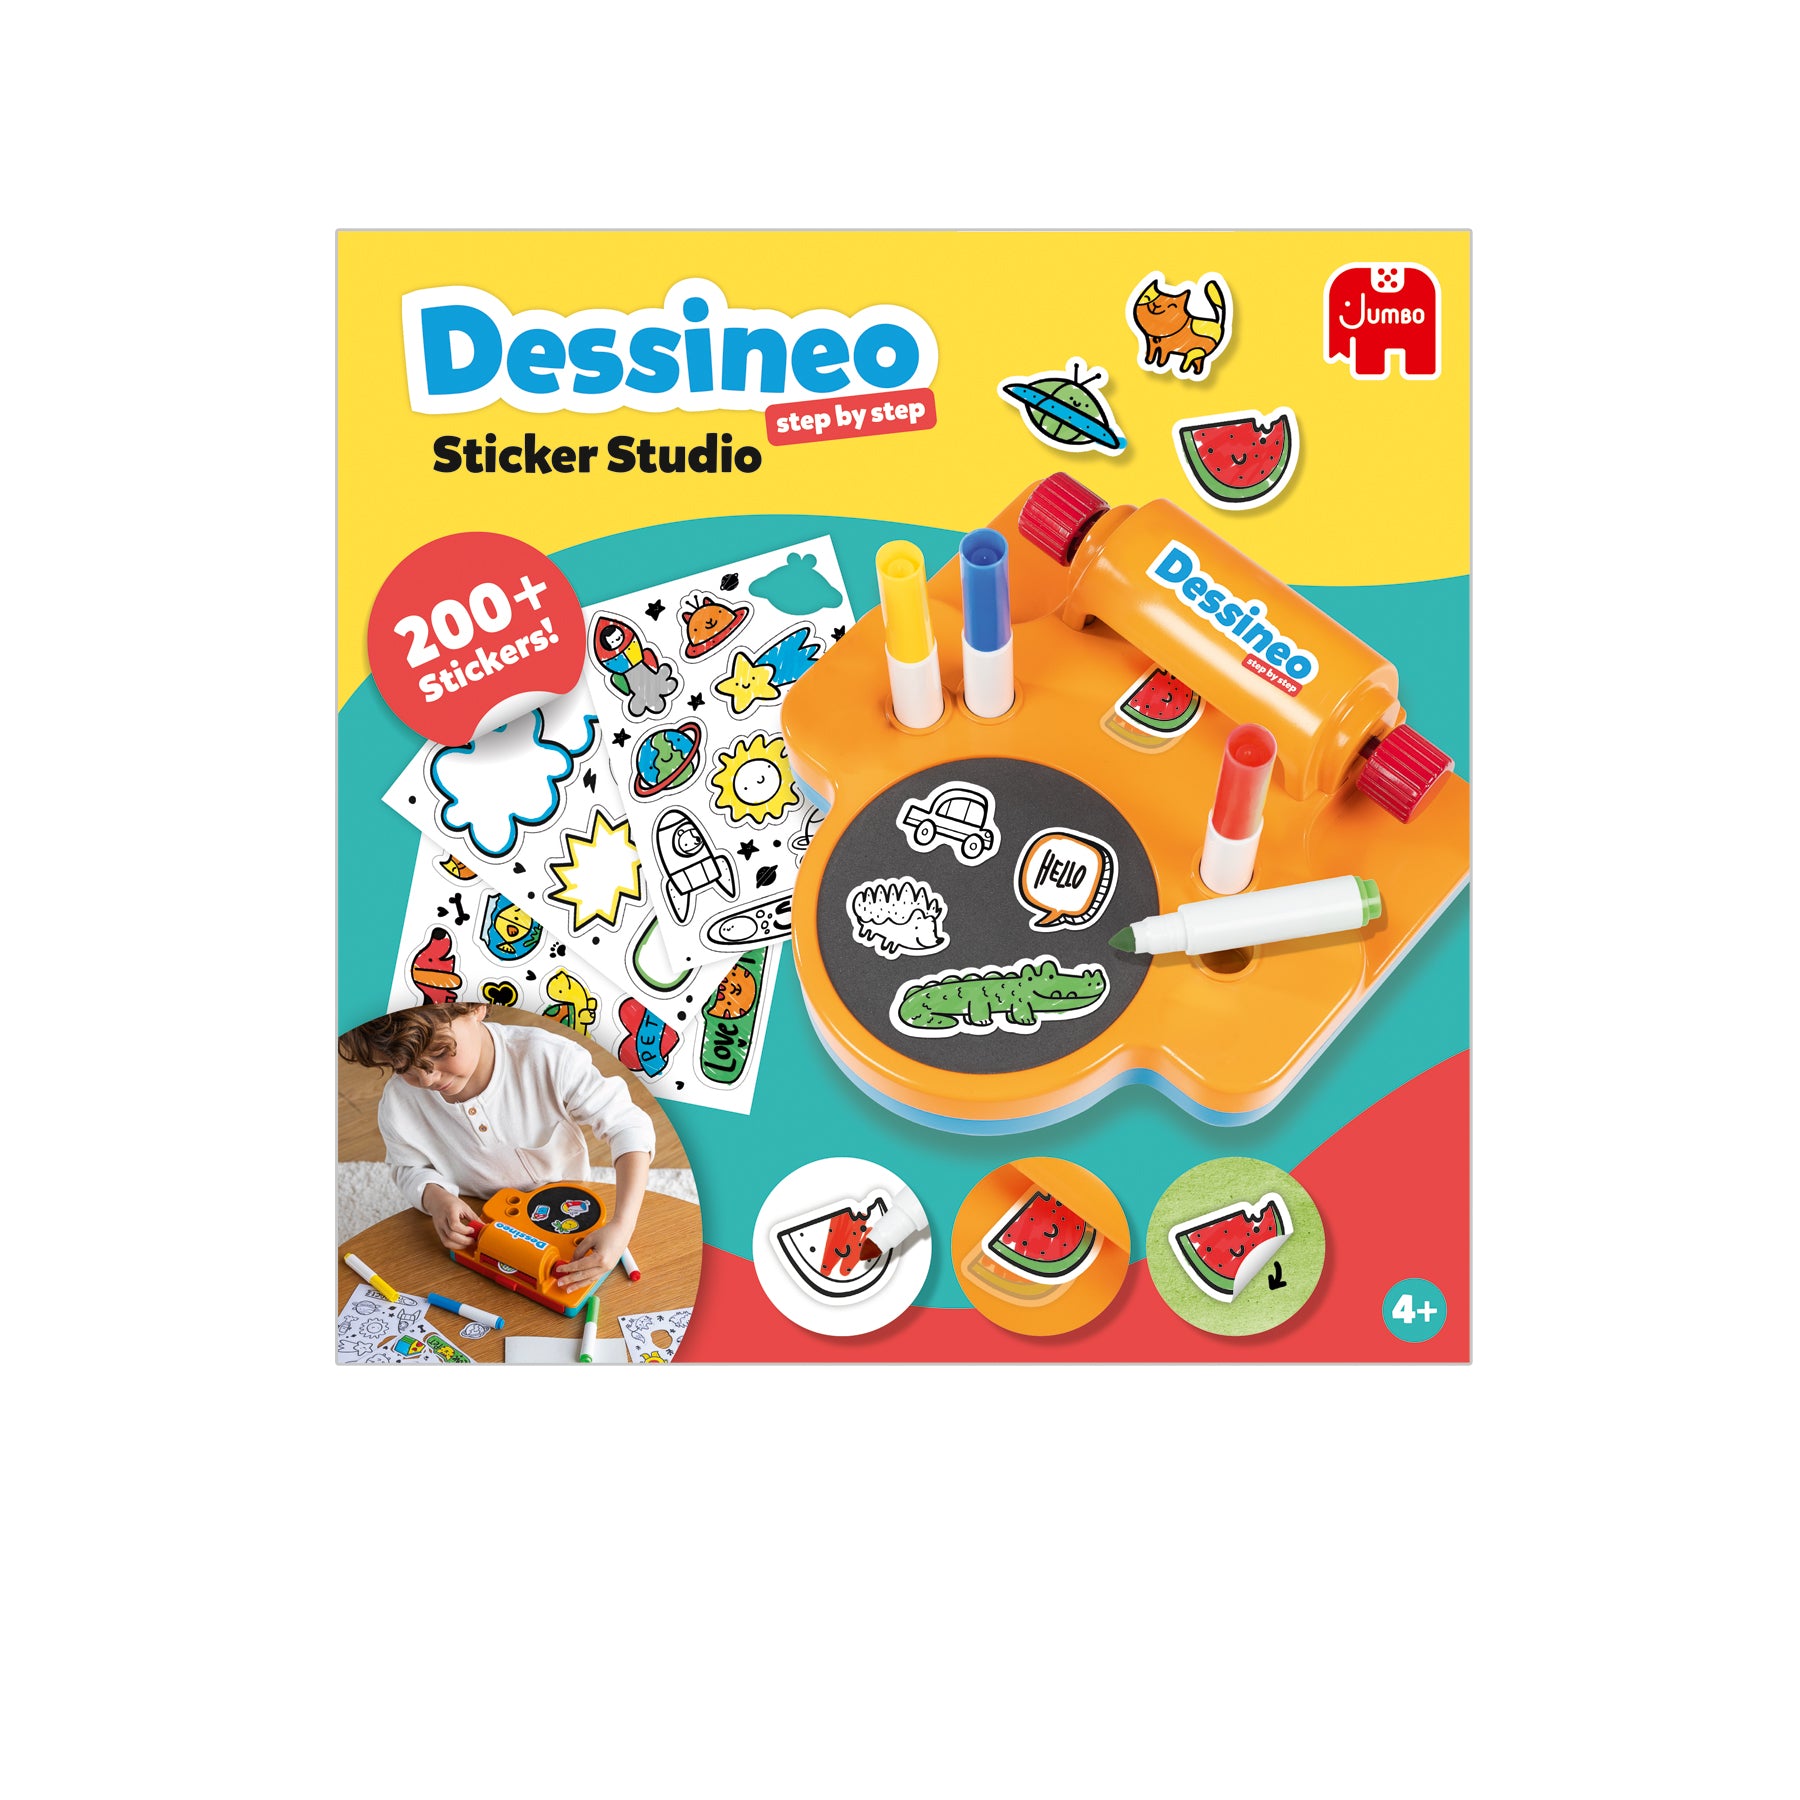 Dessineo Sticker Studio - product image - Jumboplay.com